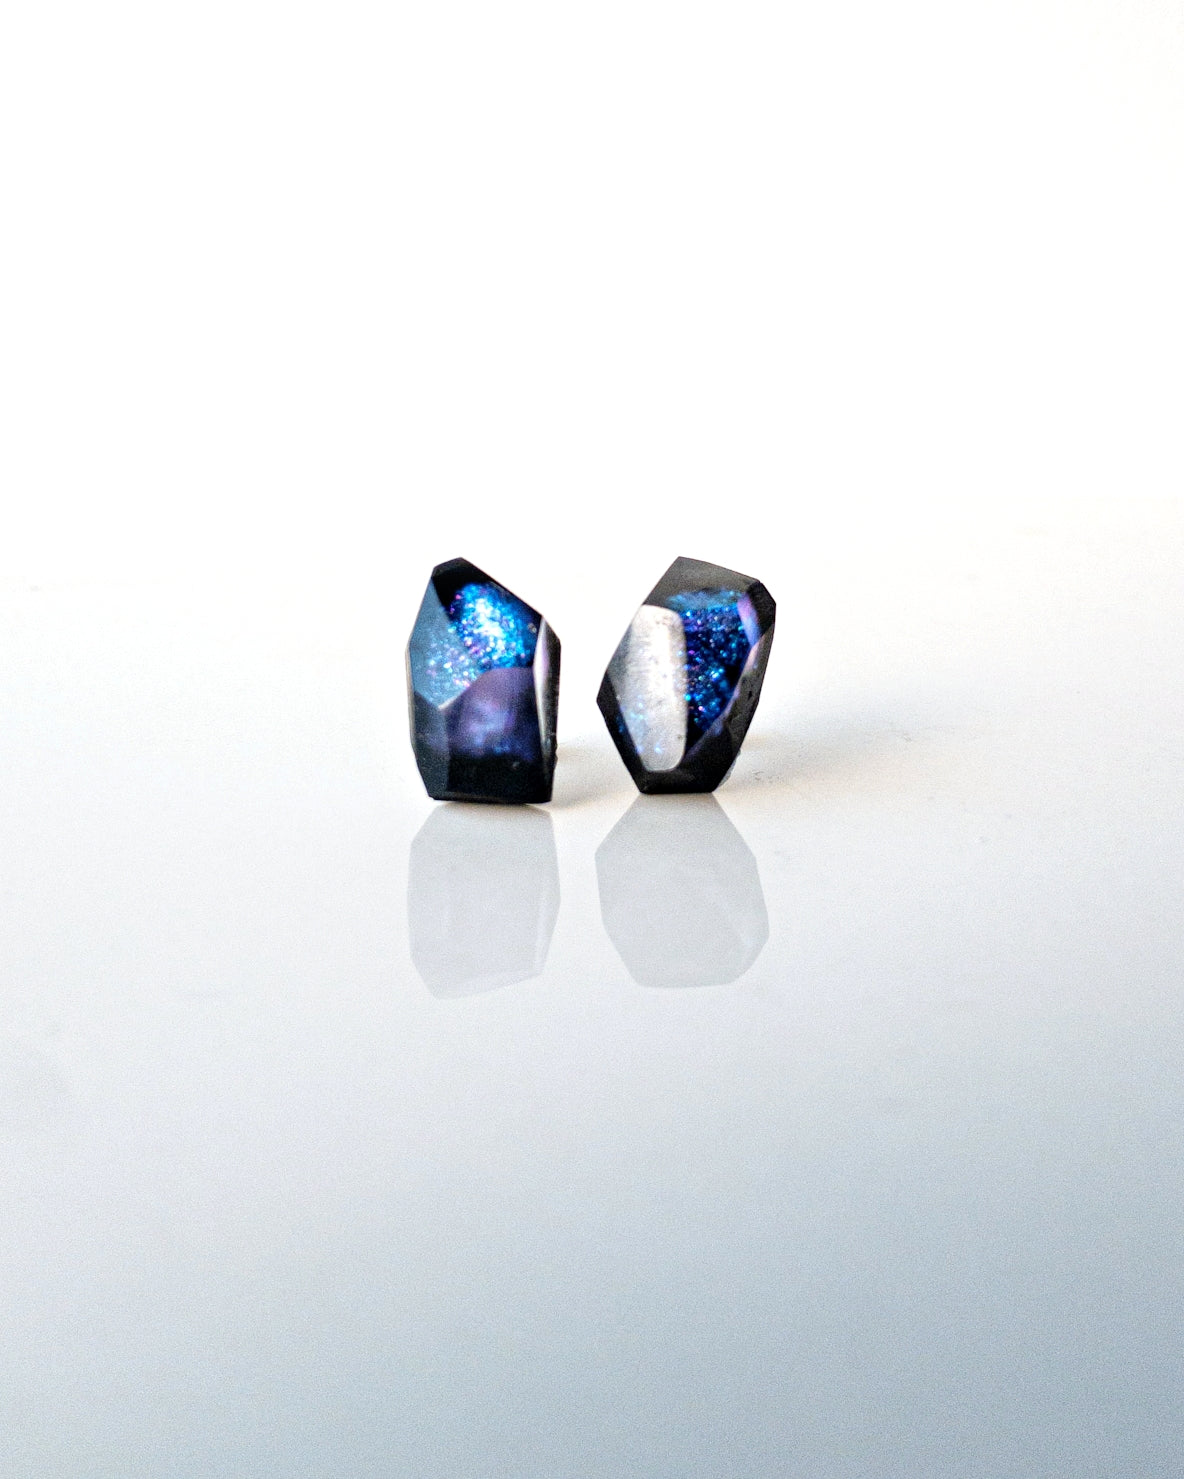 Frames earrings /crystals/ Night on the Galactic Railroad deep blue⇄deep purple 5-a